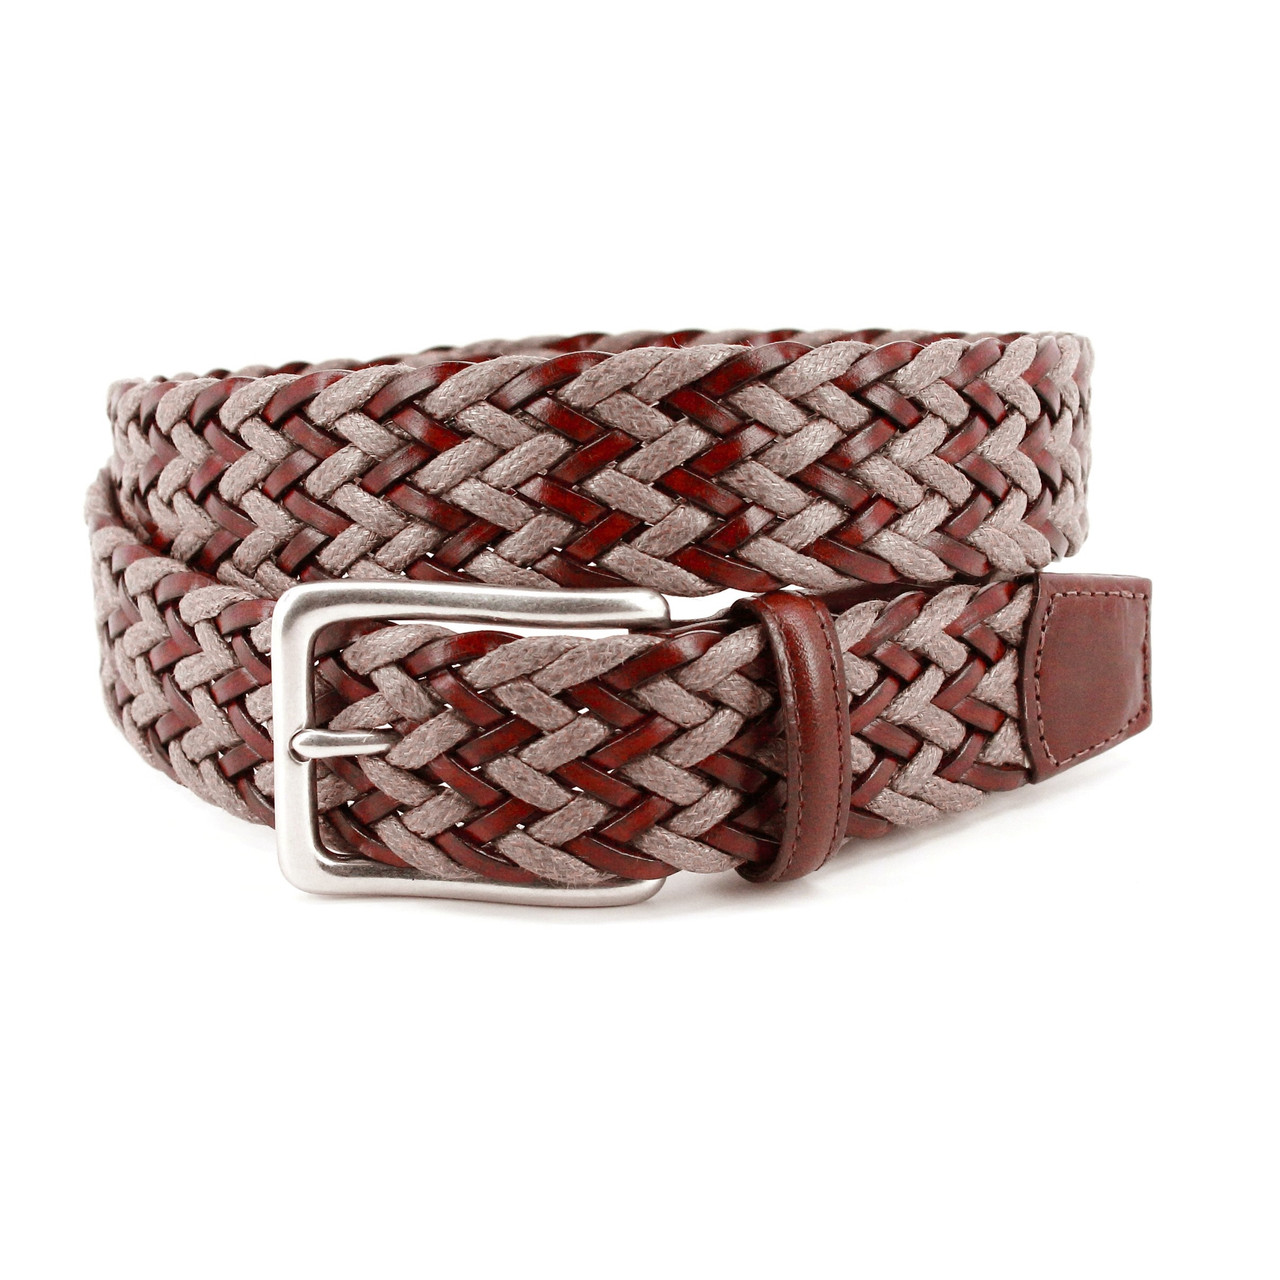 Italian chevron weave leather & linen Taupe/Brown belt